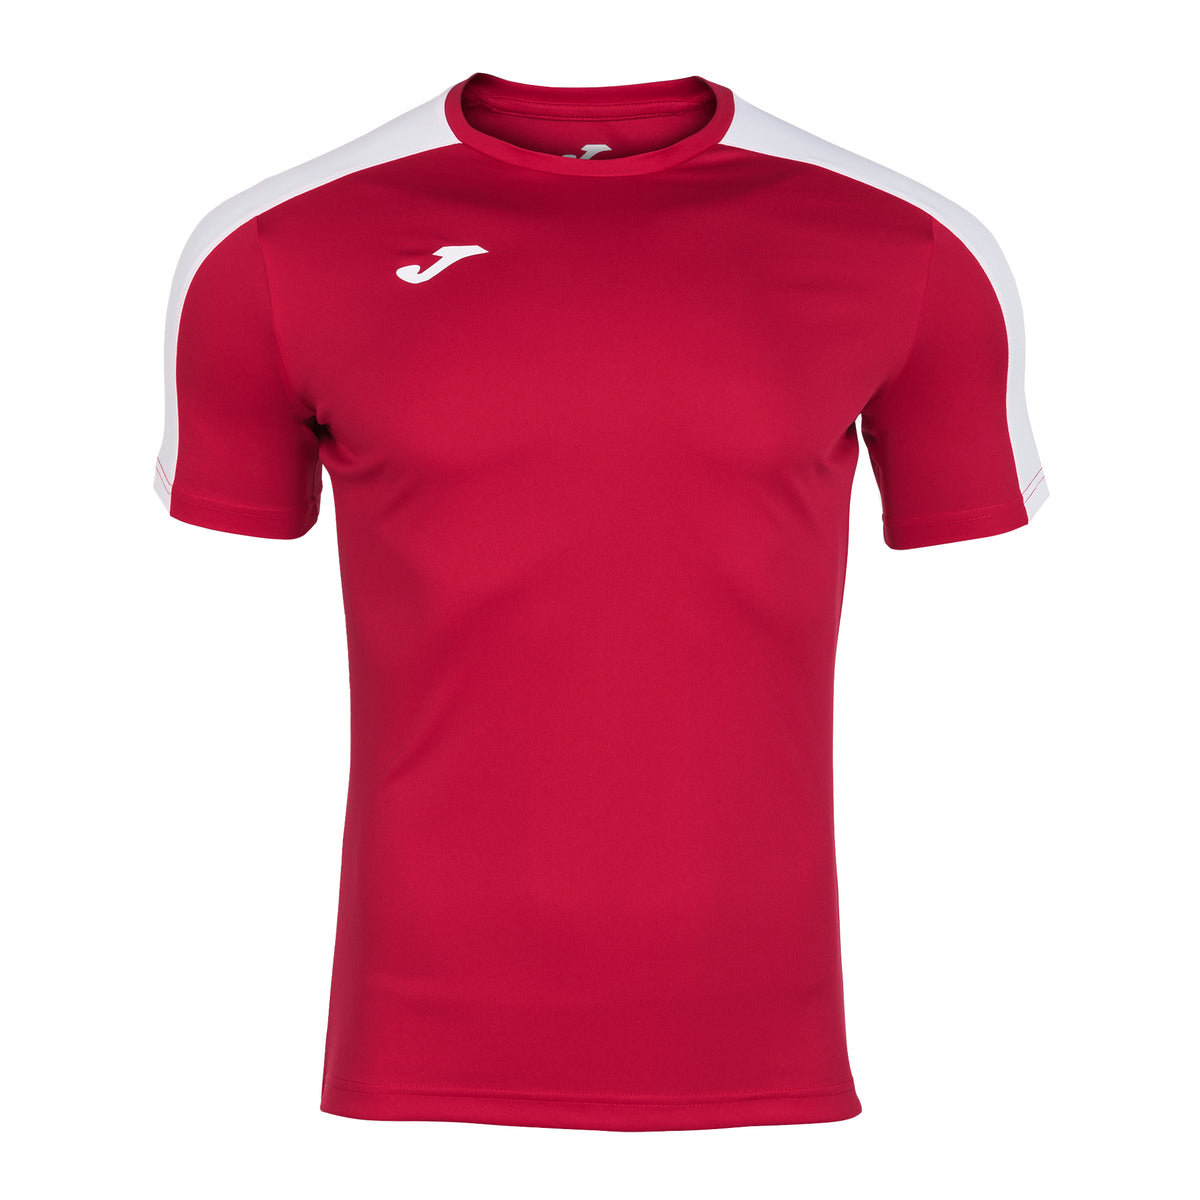 Joma Academy III Junior S/S Football Shirt: Red/White